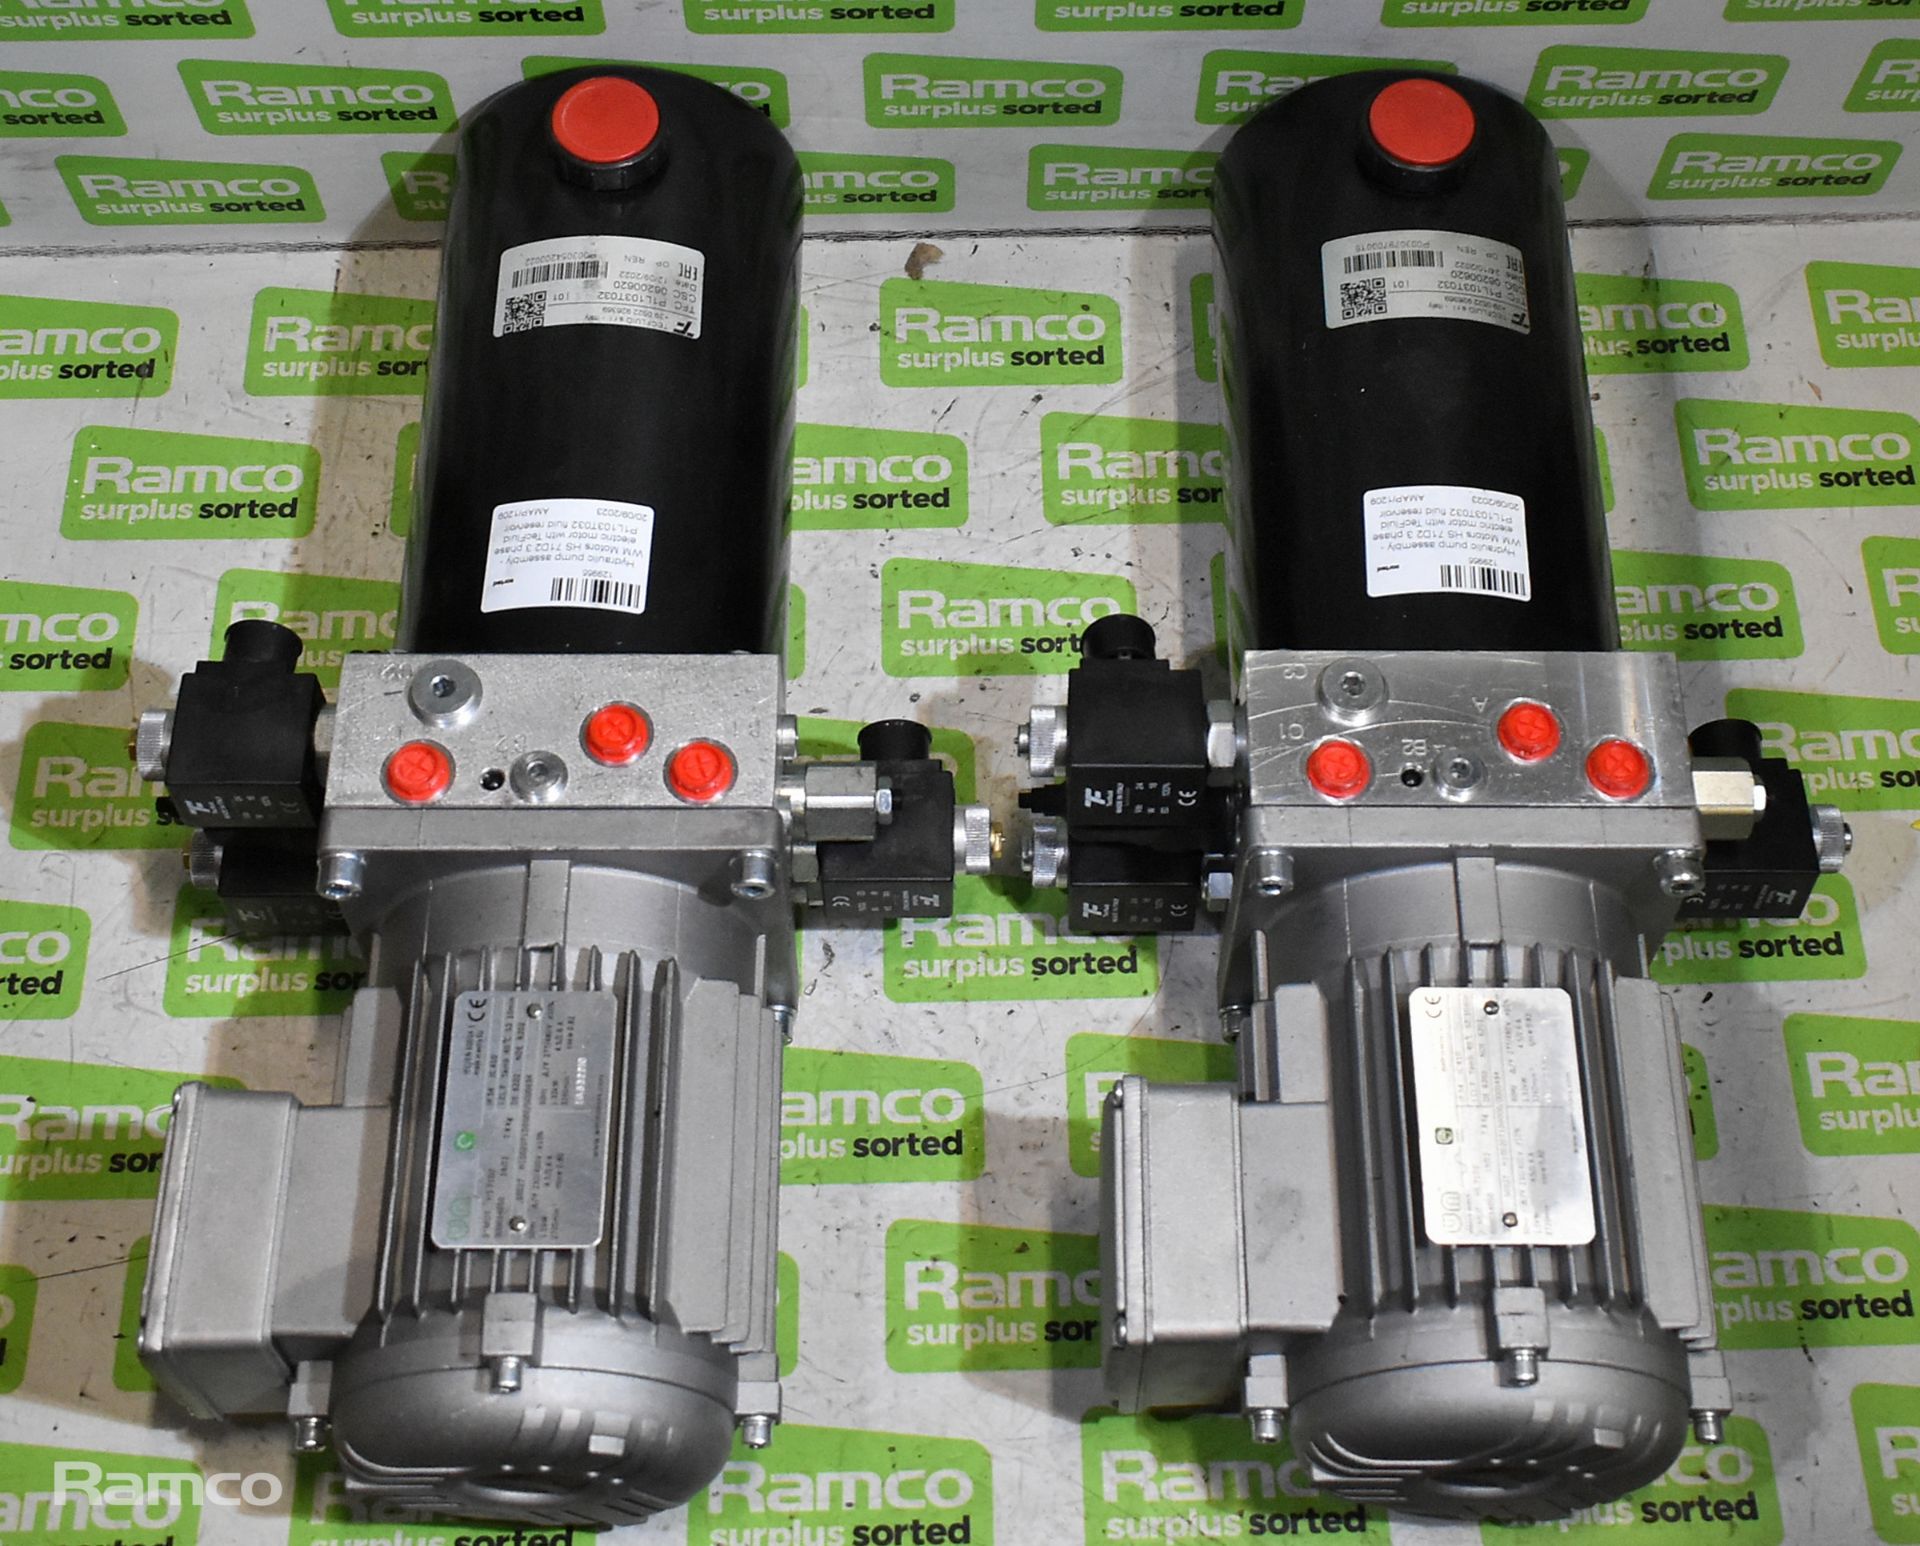 2x Hydraulic pump assemblies - WM Motors HS 71D2 3 phase electric motor with TecFluid P1L103T032